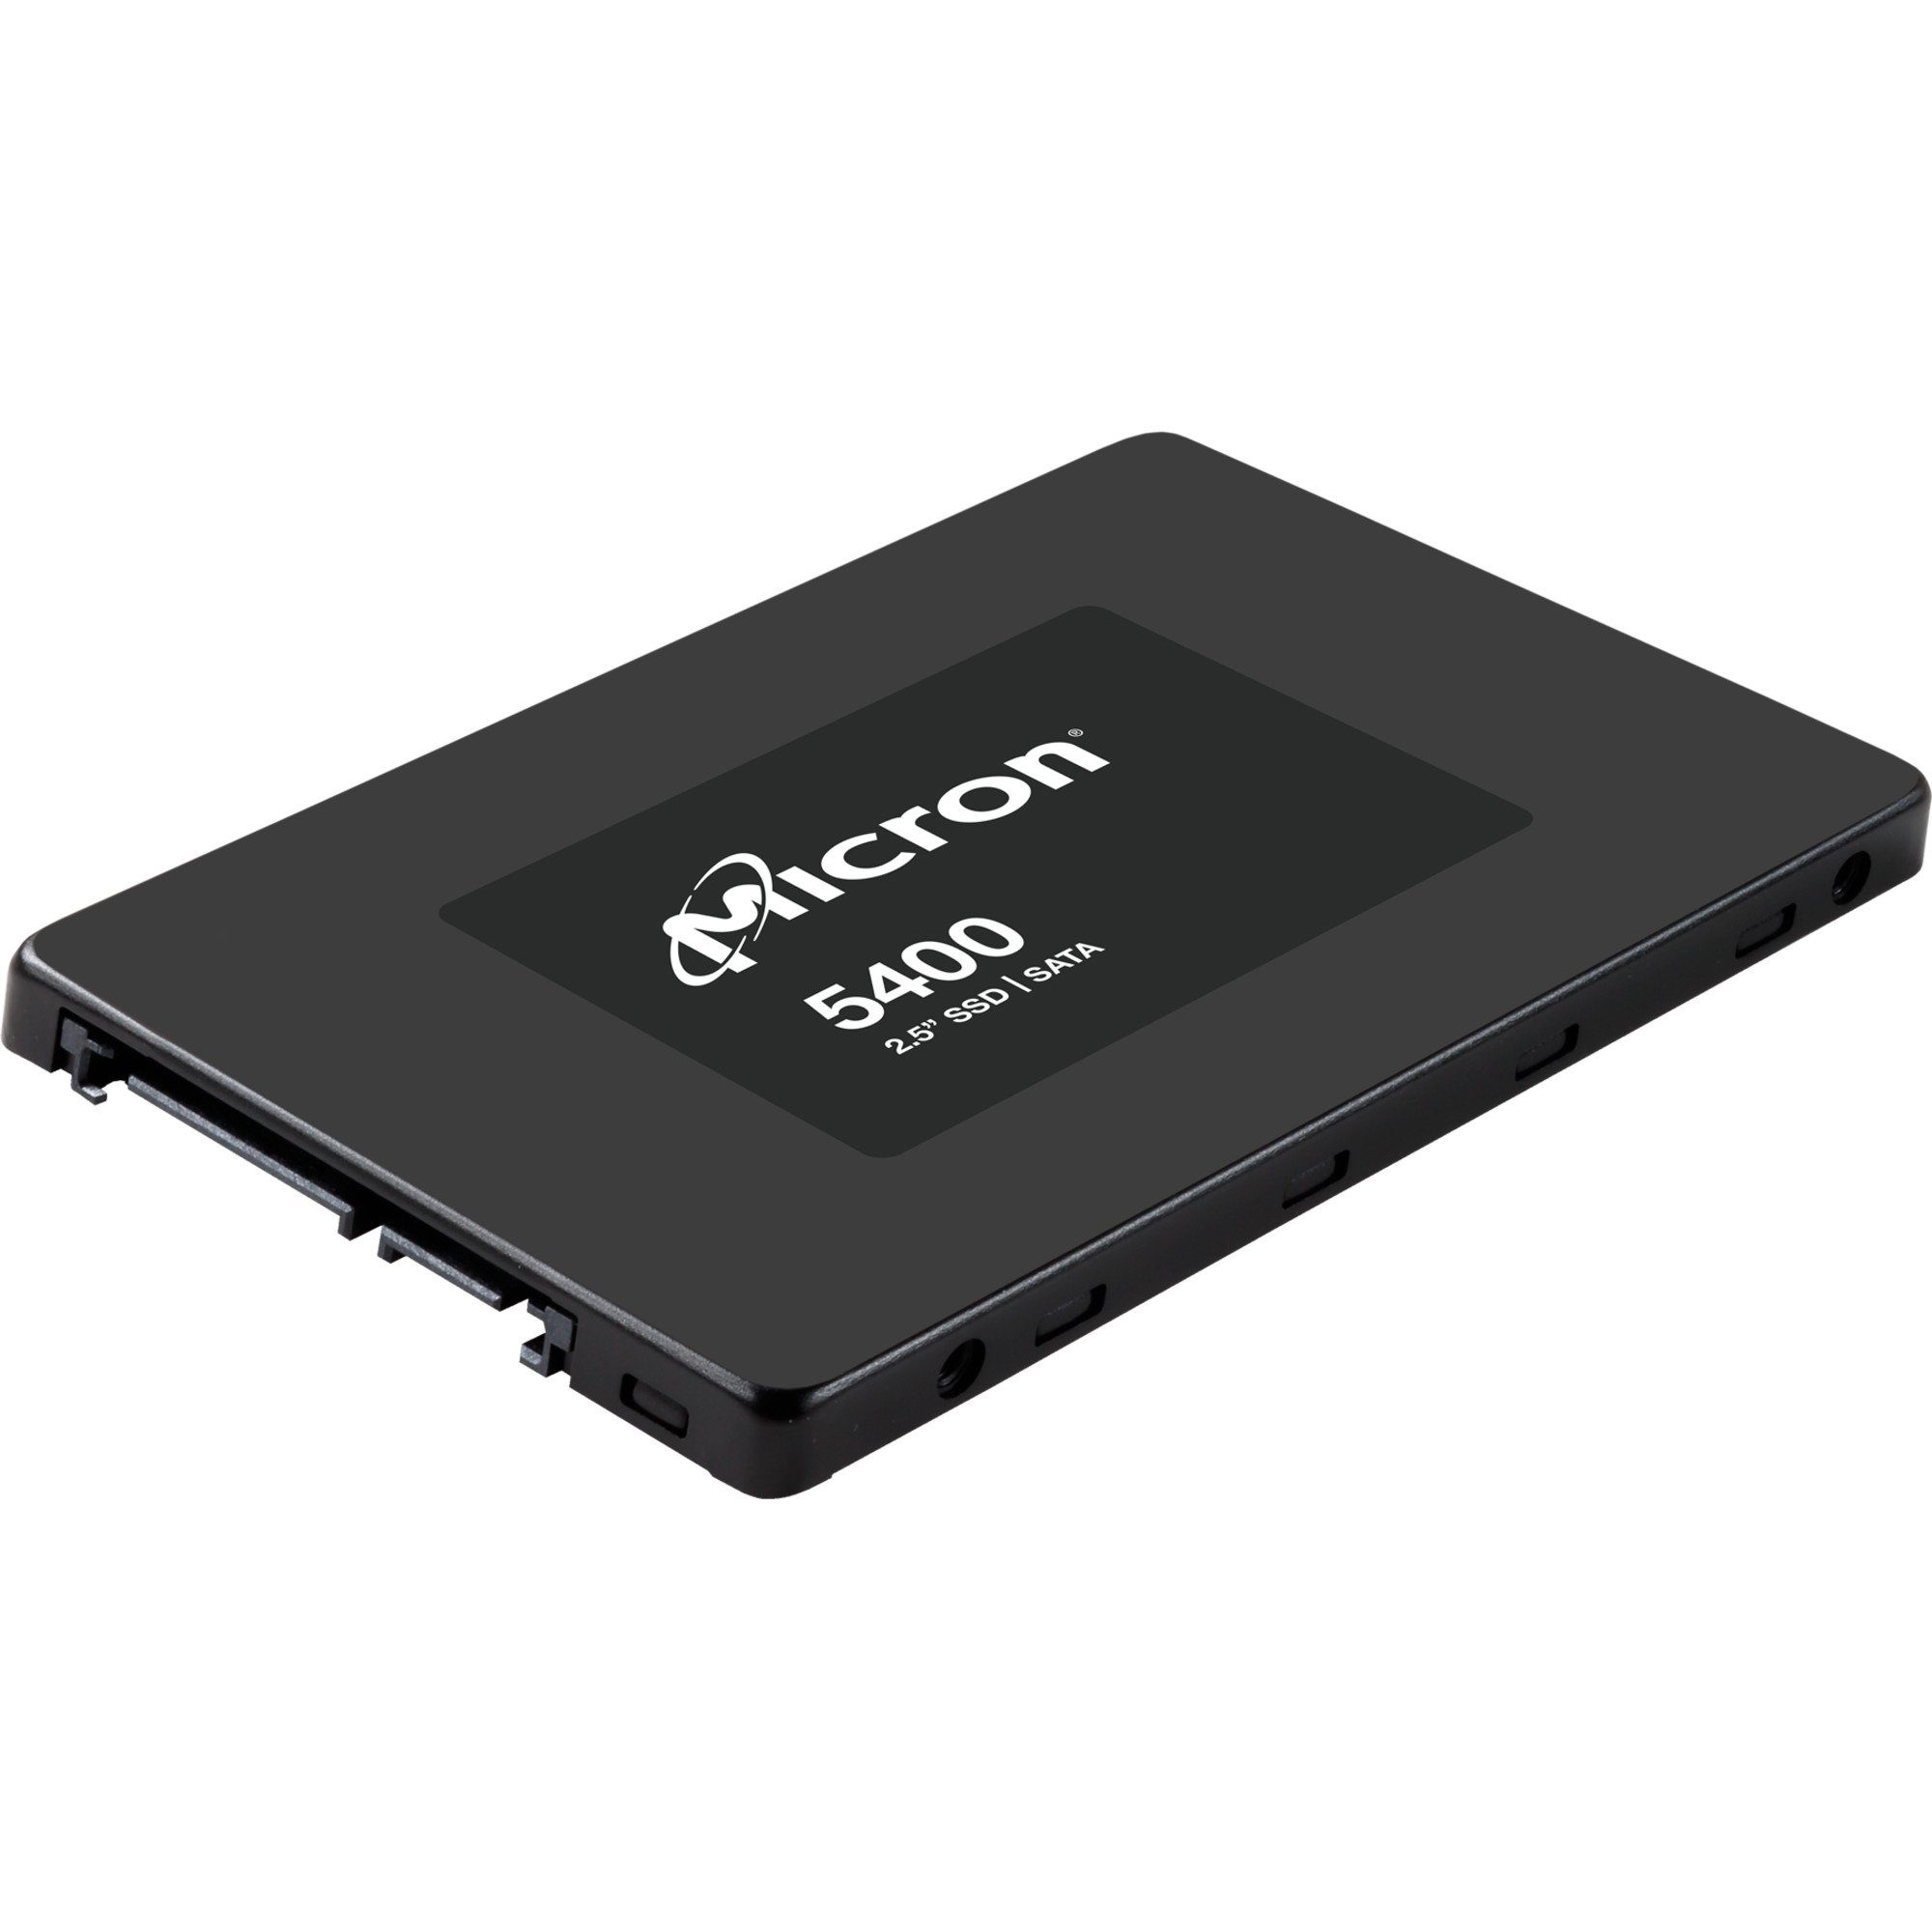 Micron 5400 PRO 960 GB SSD-Festplatte (960 GB) 2,5""